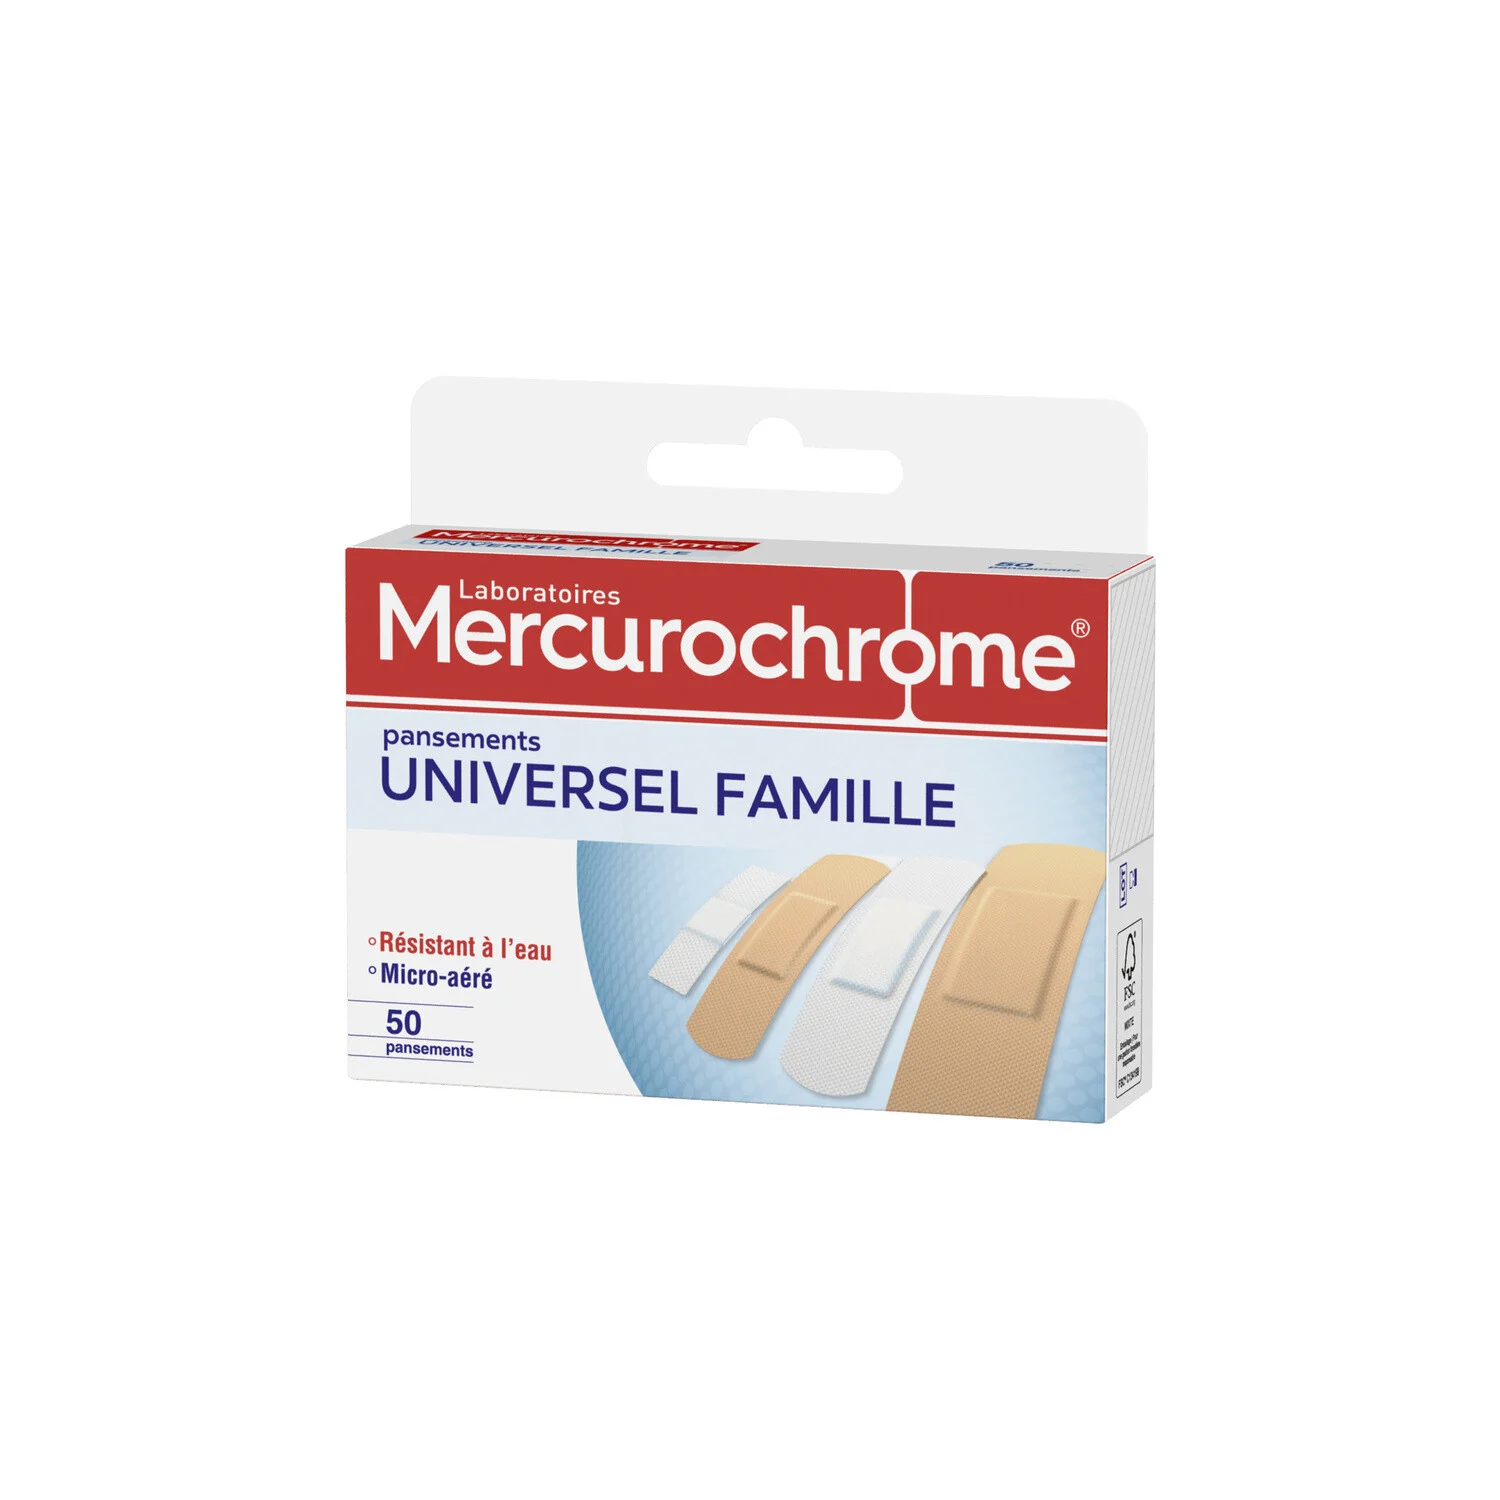 Pansements Universel Famille X50 - Mercurochrome